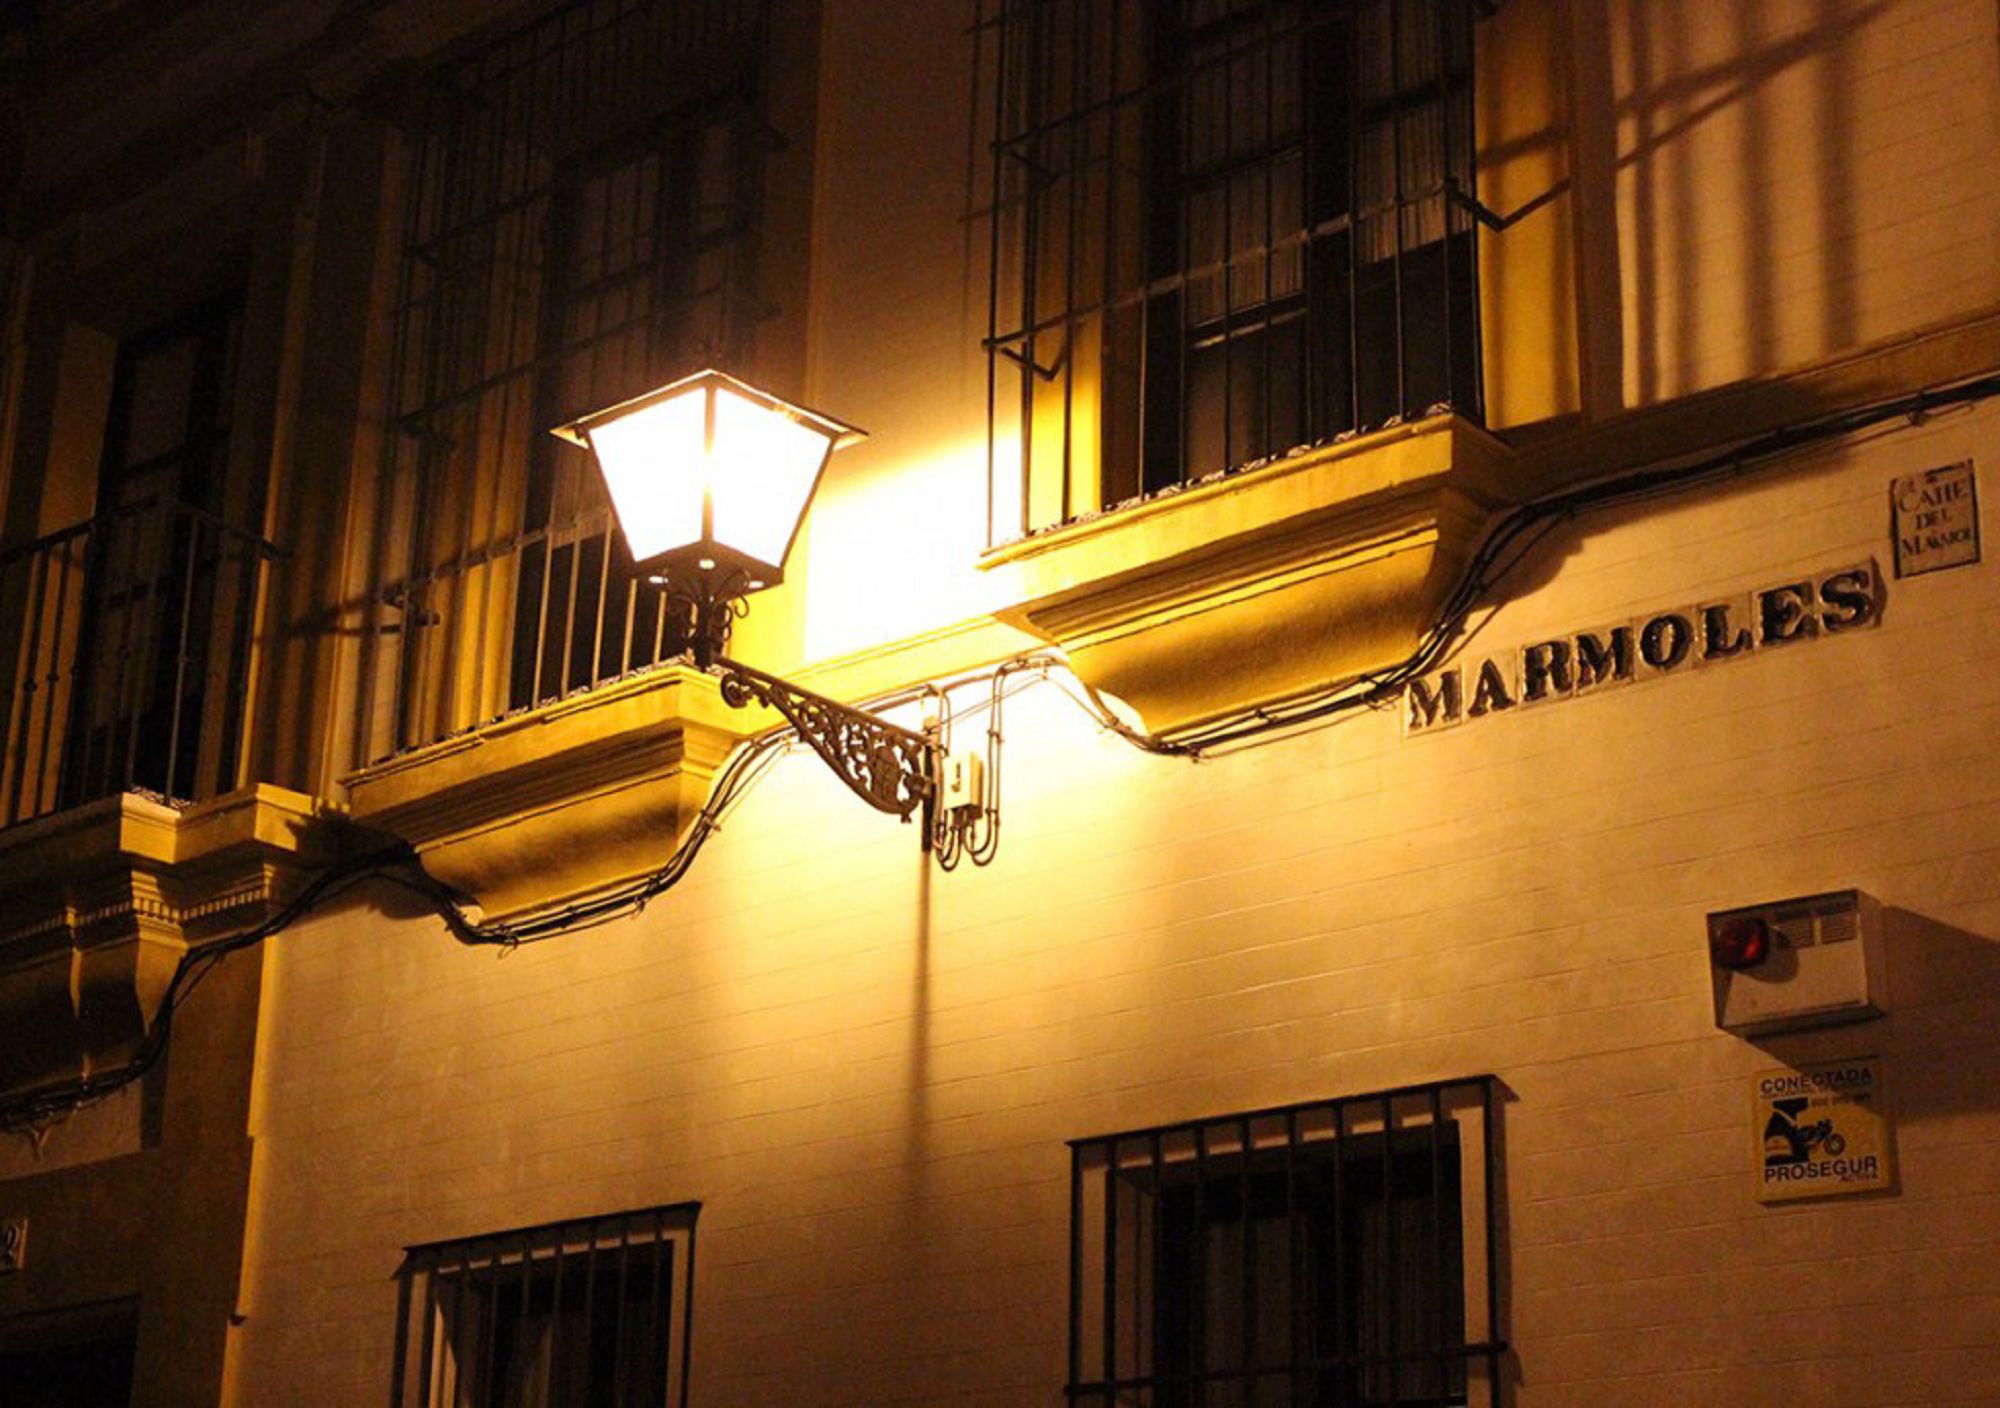 reservar online tours guiados nocturnos Sevilla Paranormal